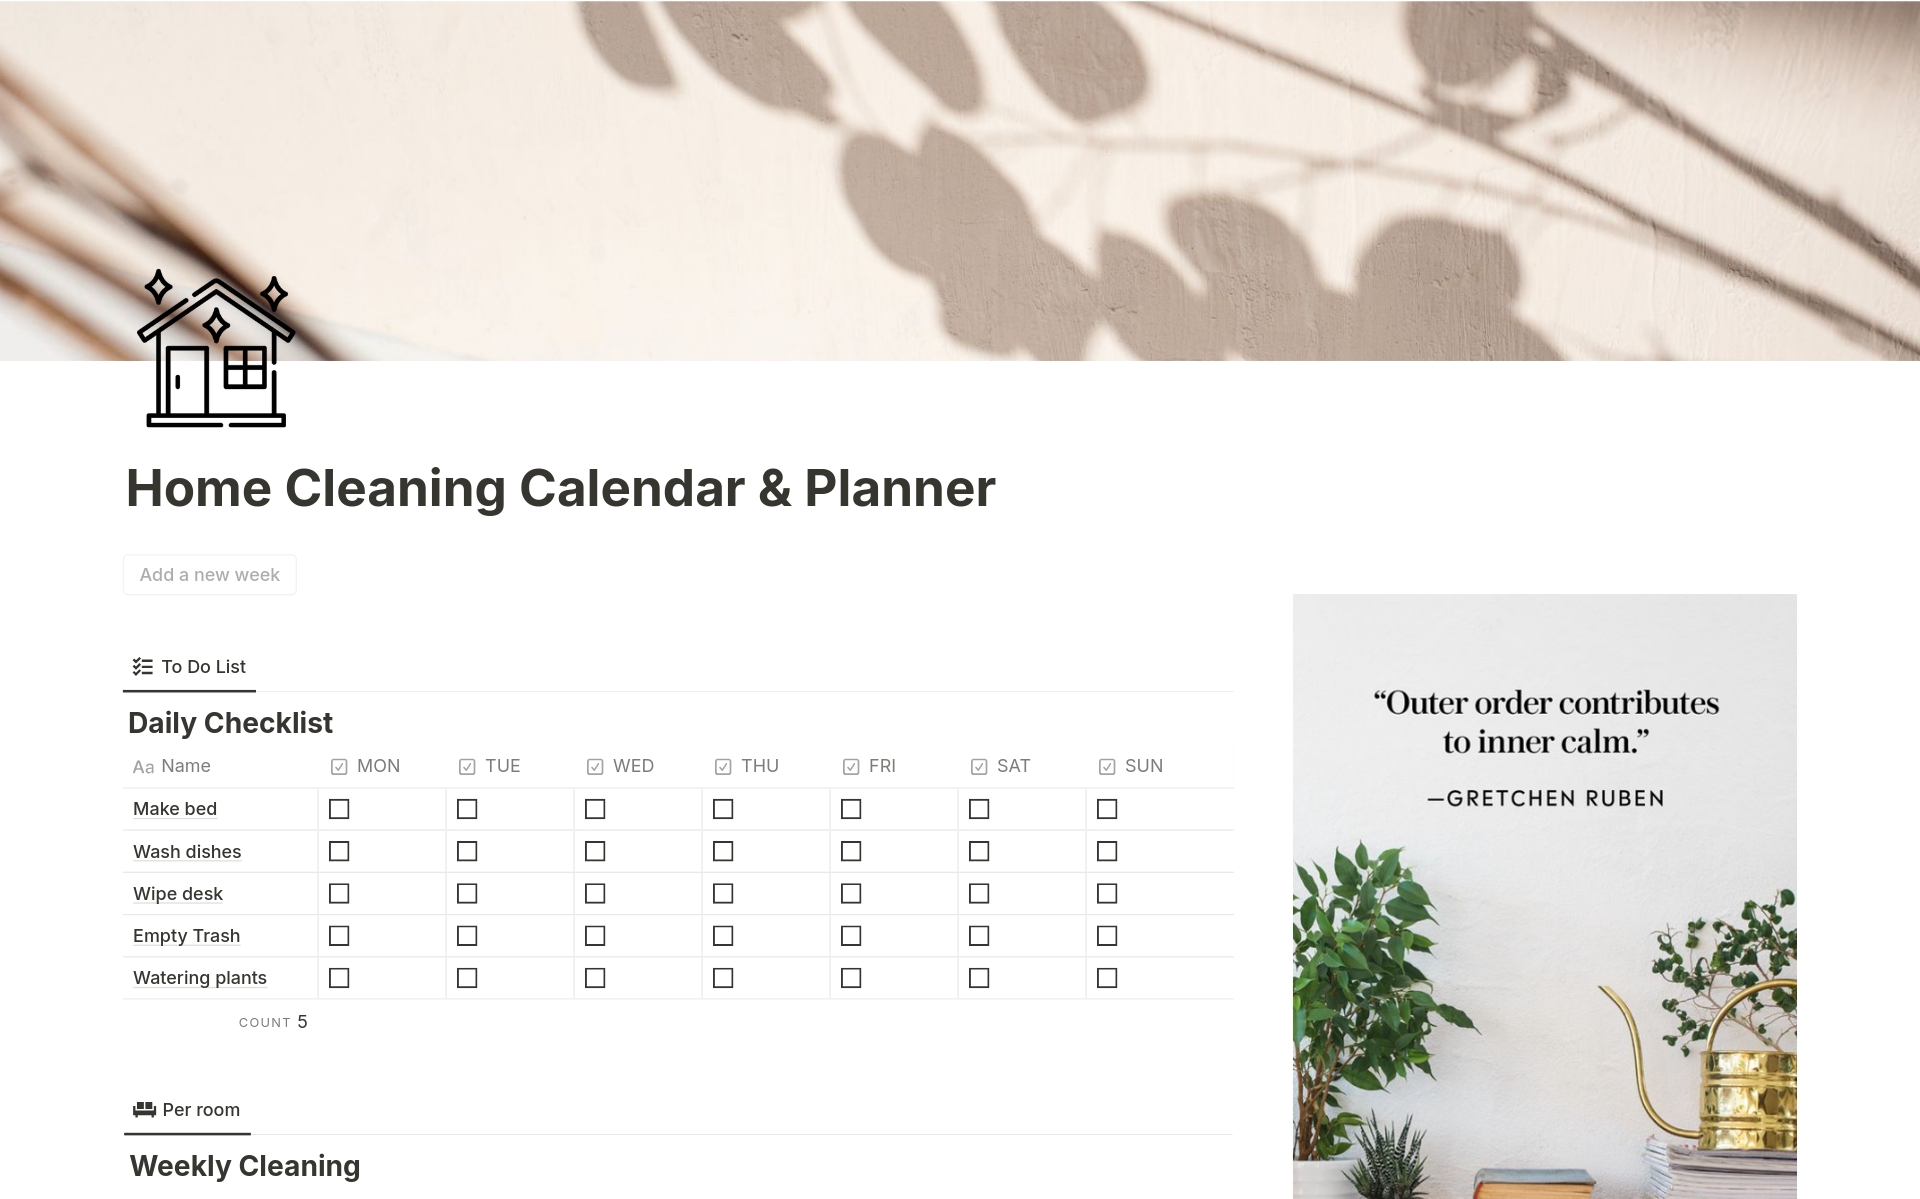 Home Cleaning Calendar & Planner님의 템플릿 미리보기